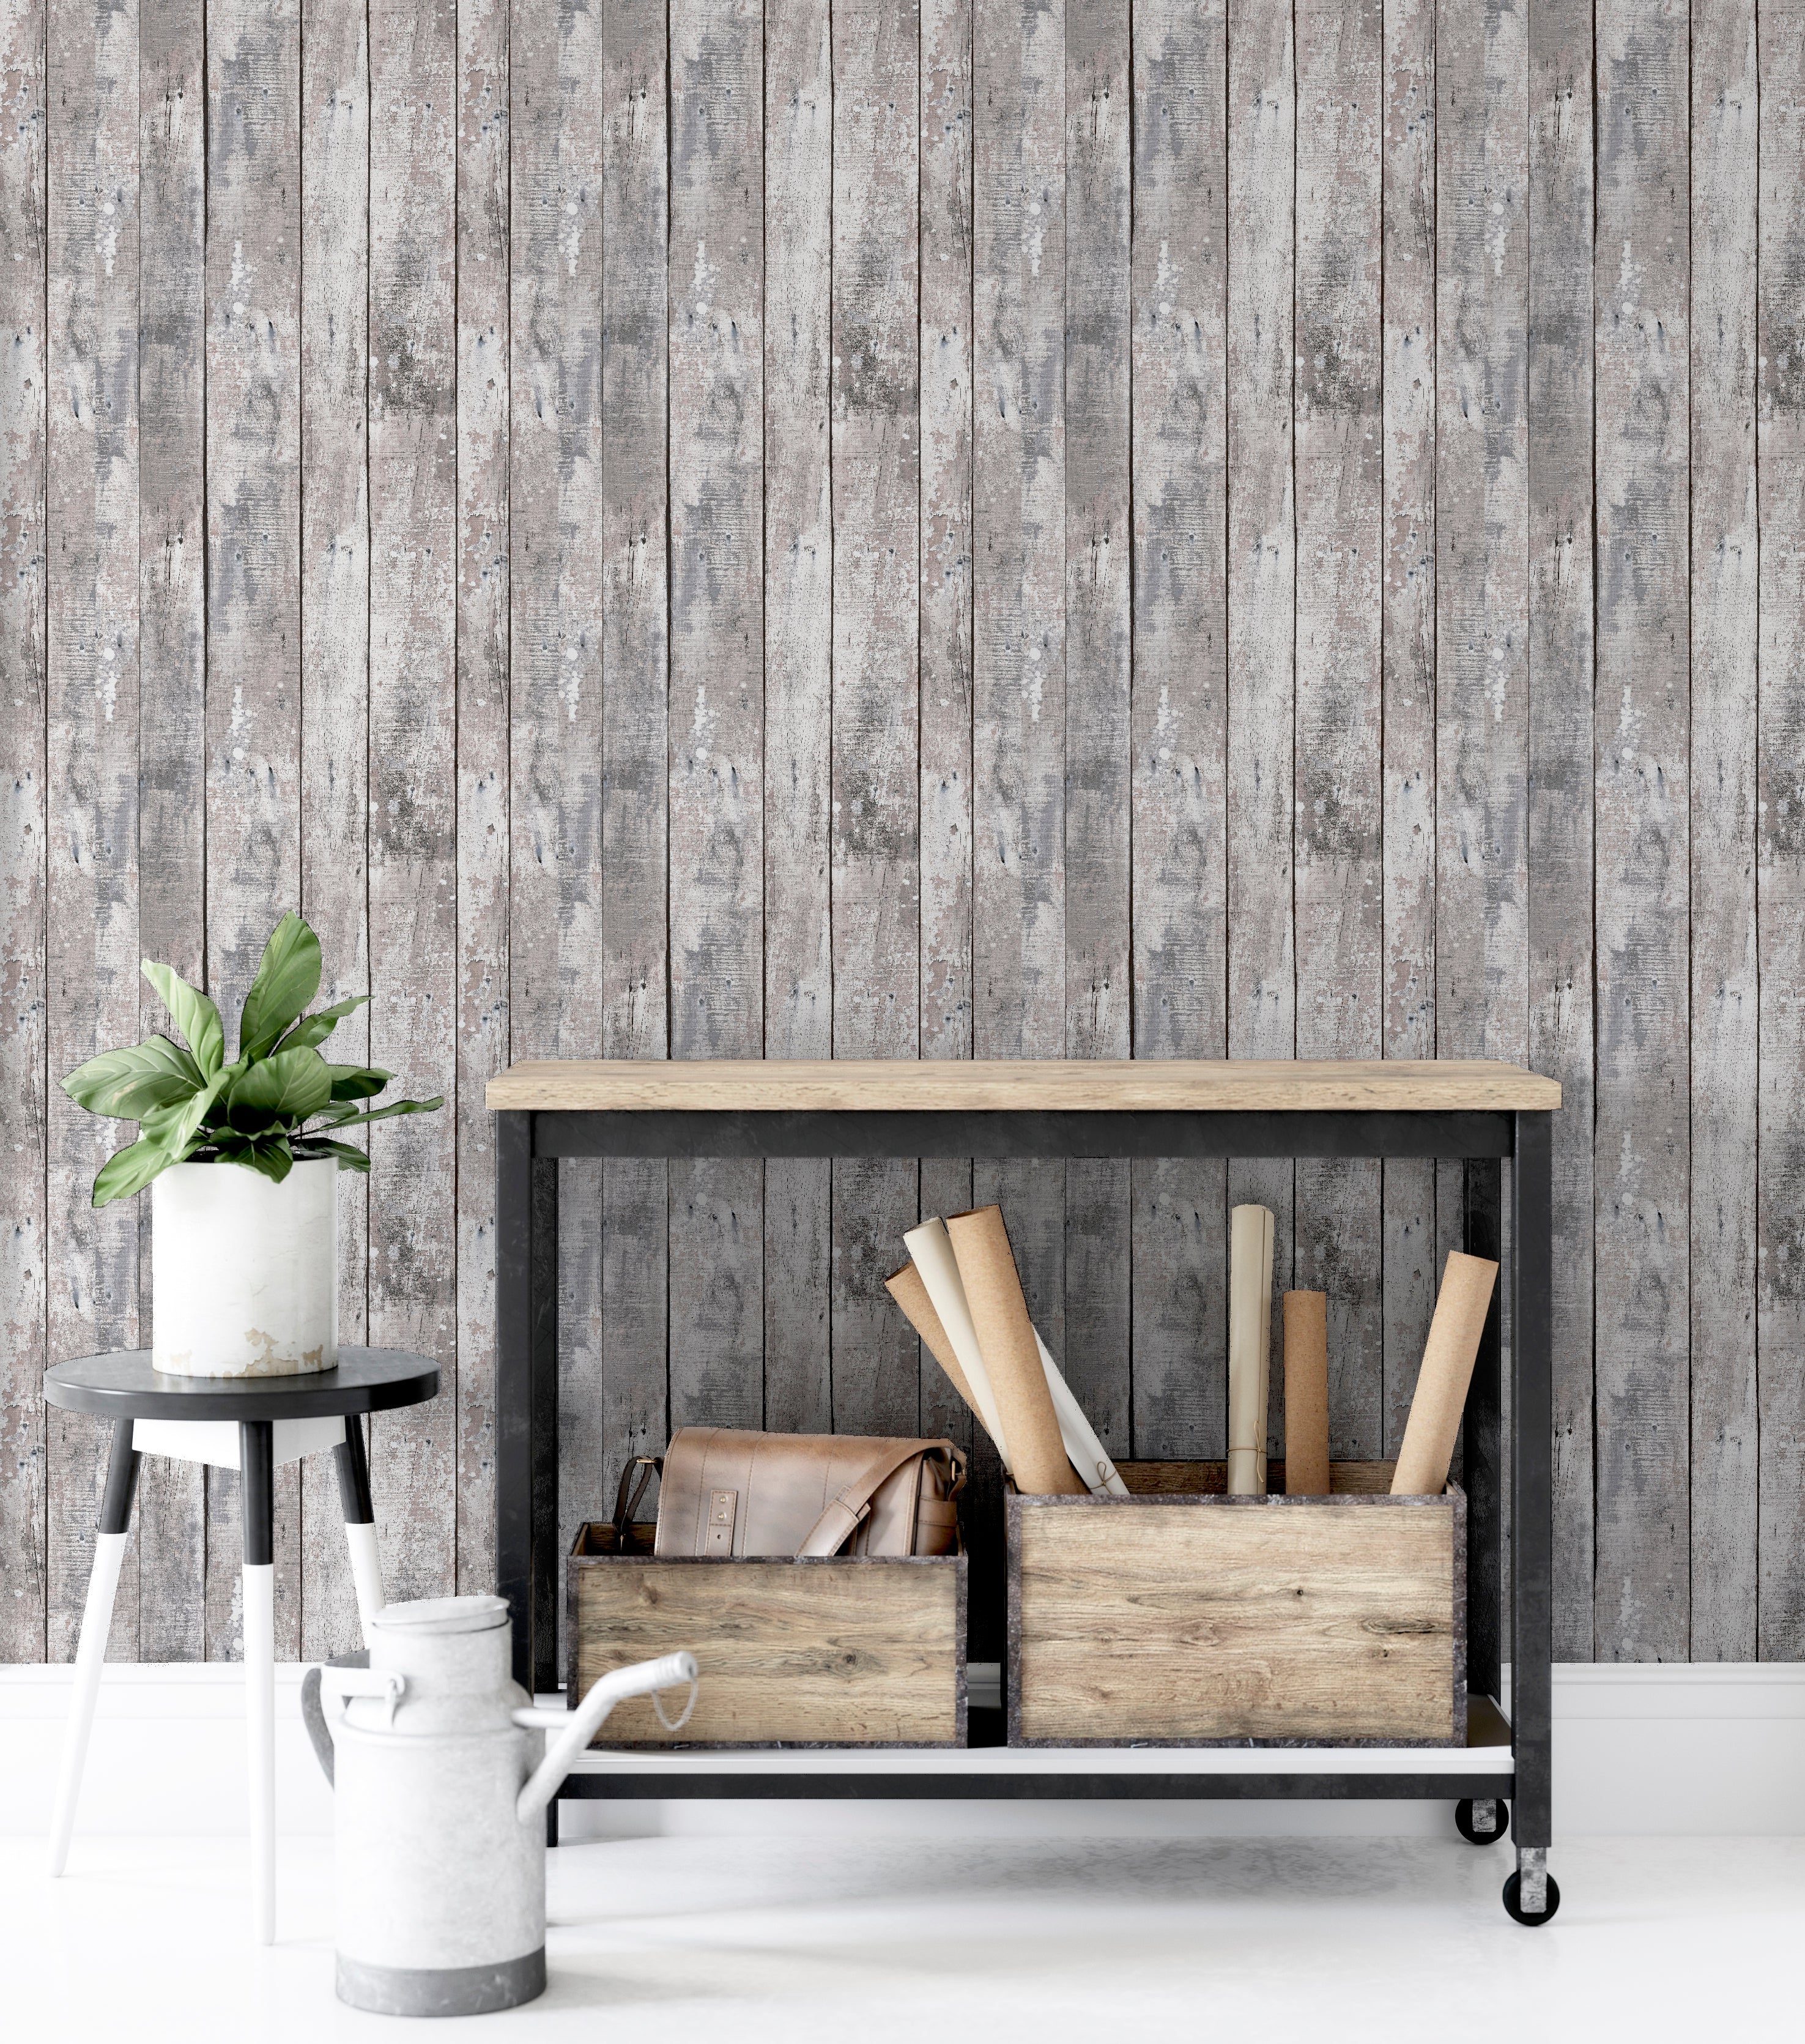 Odell Wood Natural Wallpaper